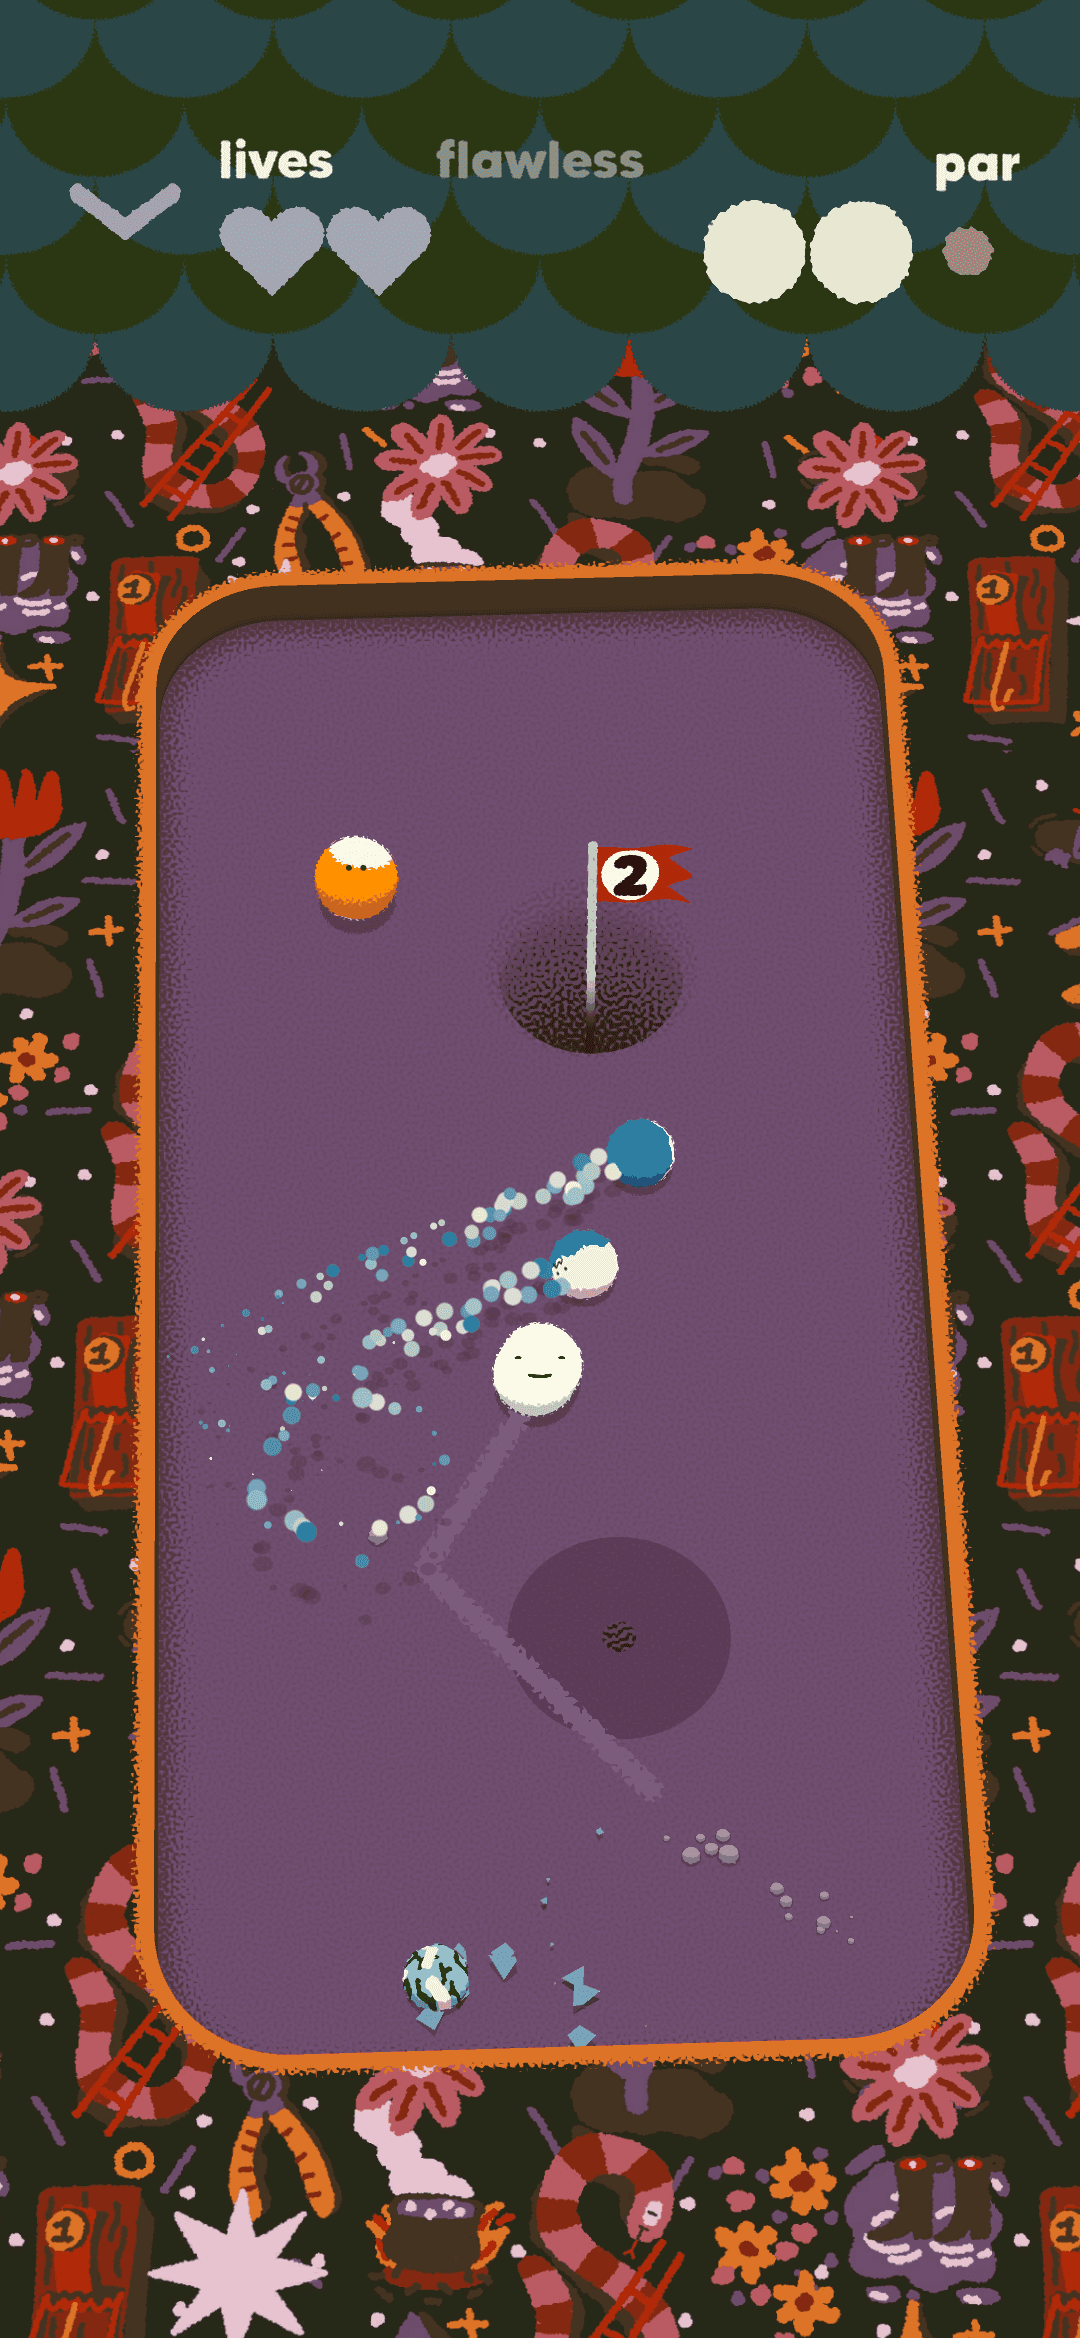 subpar pool screenshot game